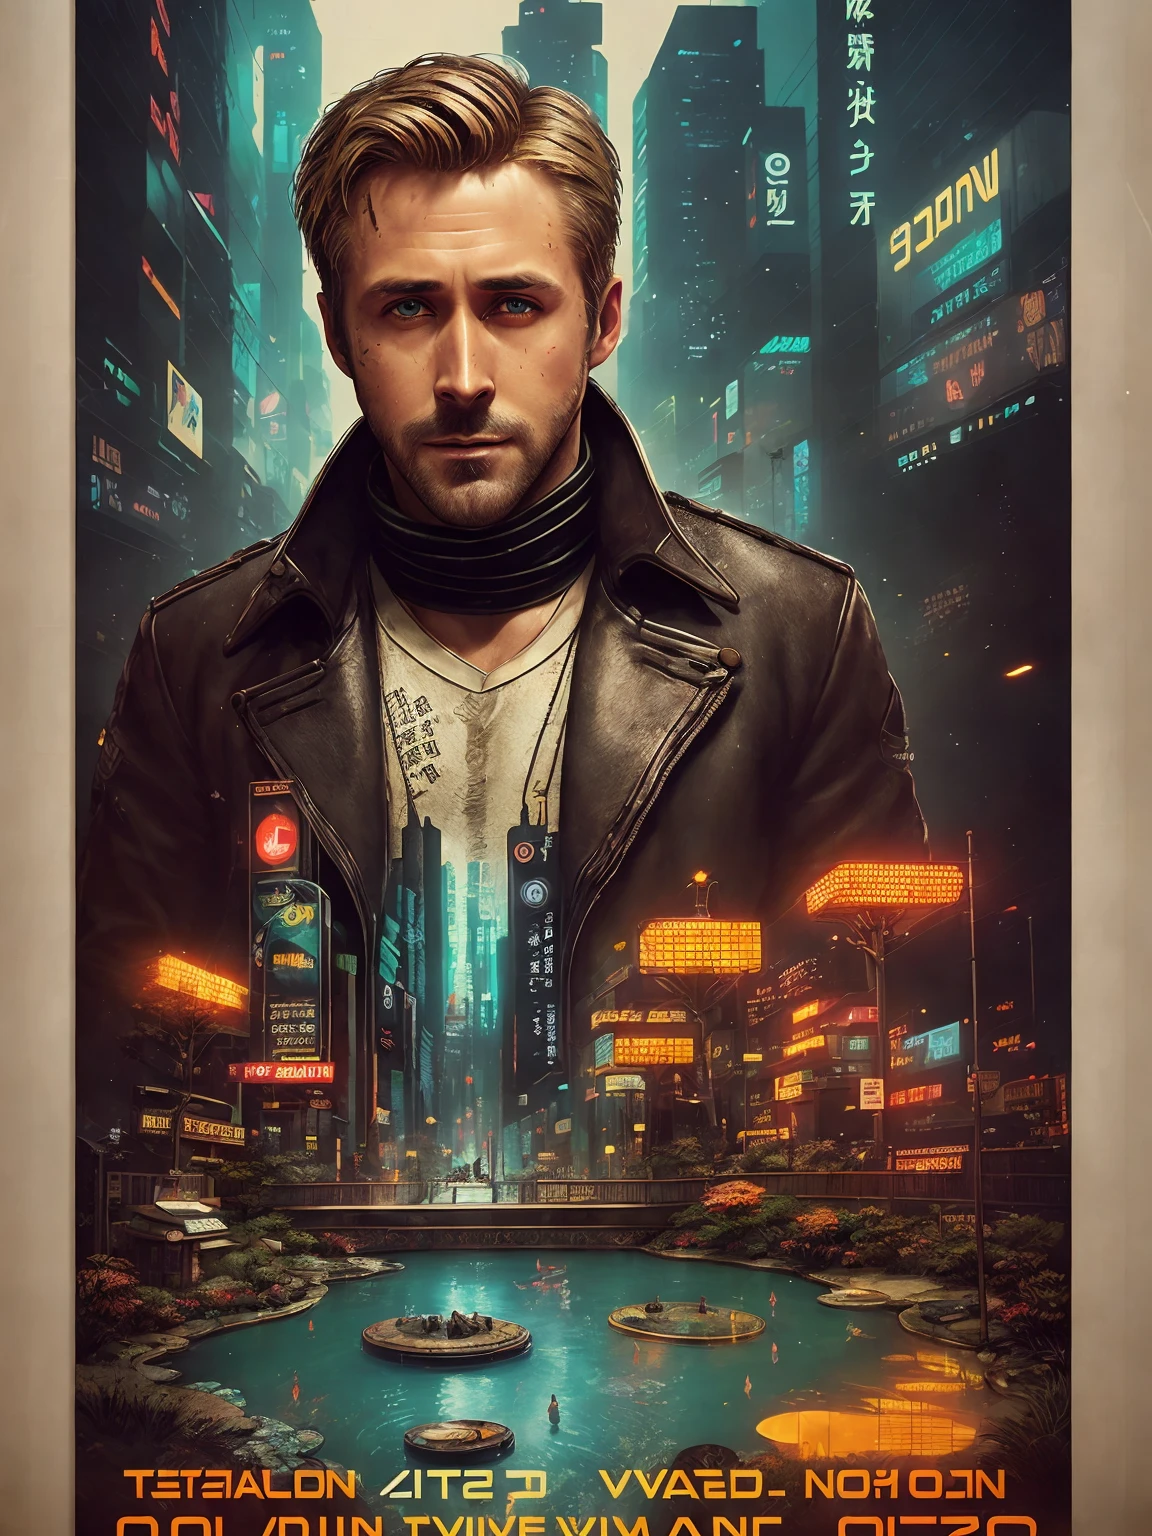 40yo Ryan Gosling จาก Blade Runner 2049, ความผิดพลาดทางดิจิทัล, (โปสเตอร์:1.6), โปสเตอร์ on wall, movie โปสเตอร์, ภาพเหมือน, ((เอียงกะ))
สวมเสื้อโค้ทหนังแกะสีน้ําตาลอ่อนขนสัตว์สกปรก colar,
(สวนหินญี่ปุ่นและบ่อน้ำ:1.2), ปลาคาร์พปลาคาร์พ, (((บอนไซ))), ((สไตล์การตกแต่งภายในไฮเทคและอนาคต)), (((ใบหน้าที่มีรายละเอียดสูง))),
((ใบหน้าและผิวที่ละเอียดเป็นพิเศษ)), รายละเอียดที่ซับซ้อน, รายละเอียดที่ดี, มีรายละเอียดมาก, การติดตามรังสี, การกระเจิงใต้ผิวดิน, แสงนุ่มนวลแบบกระจาย, ความชัดลึกที่ตื้น, โดย Oliver Wetter,